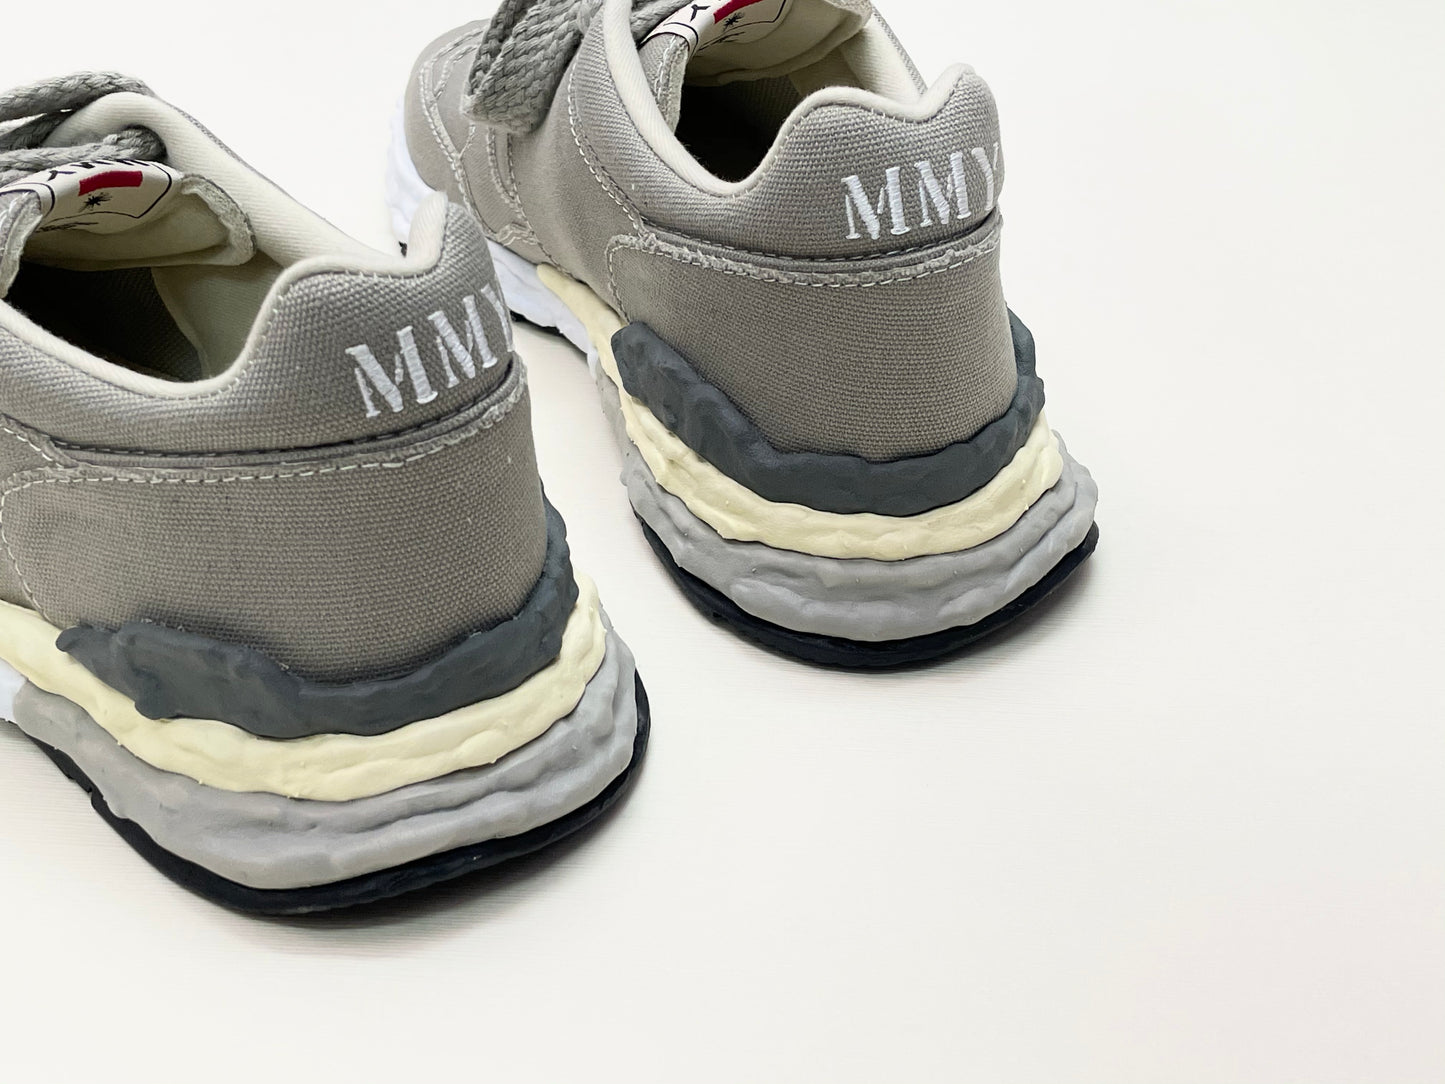 Maison Mihara Yasuhiro OG Sole Sneaker - George